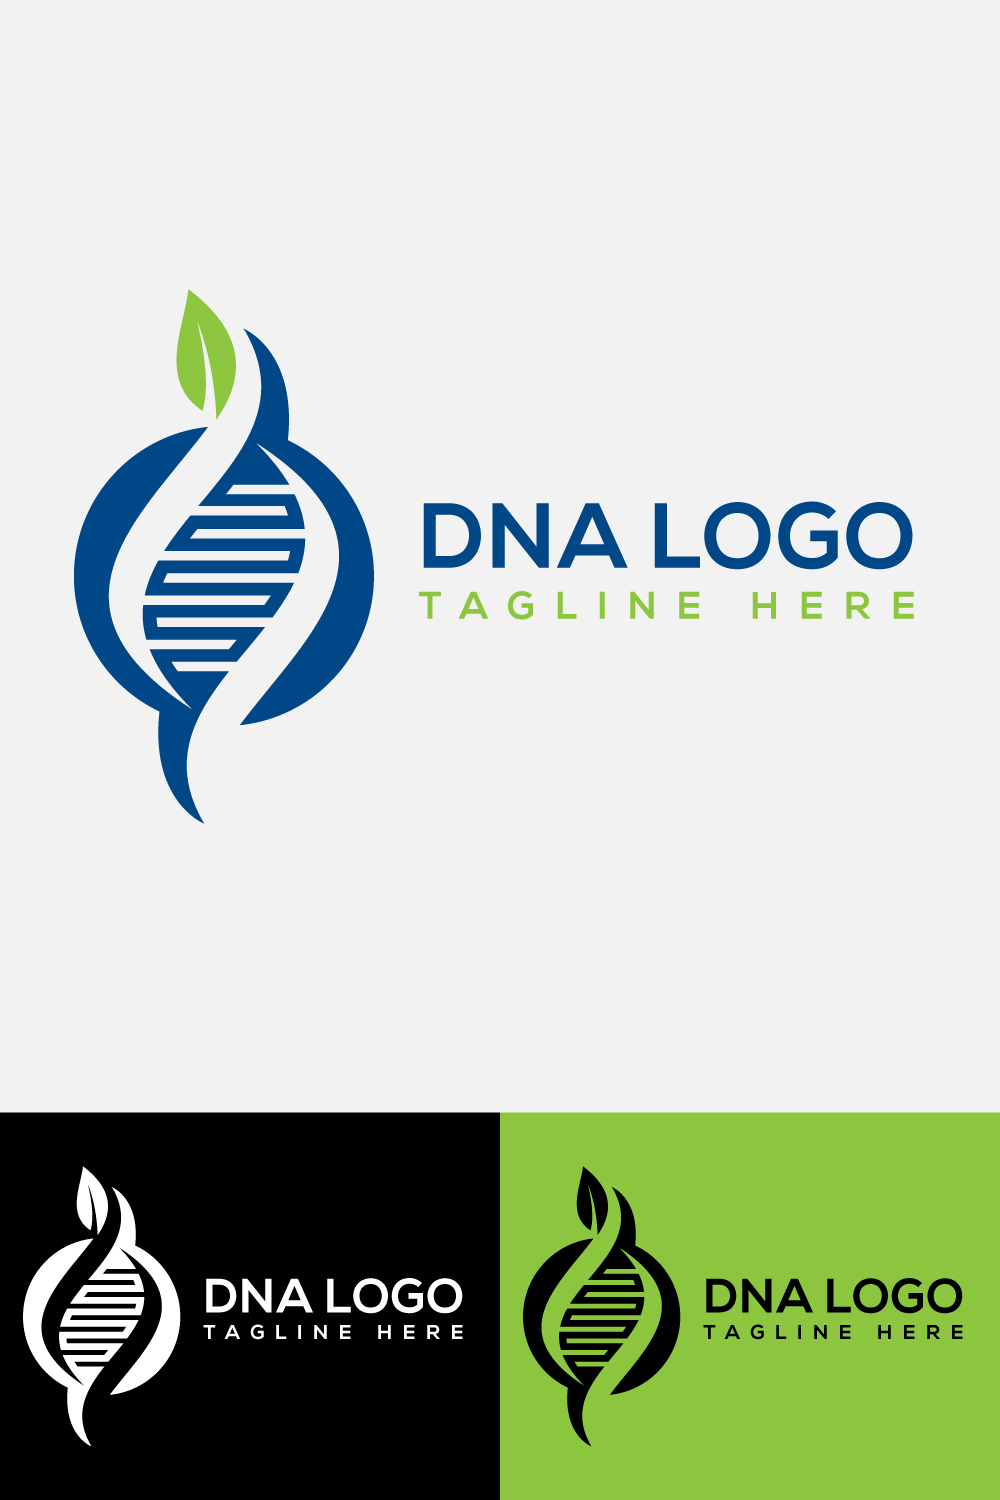 Set of images of elegant logos in the form of DNA shape.